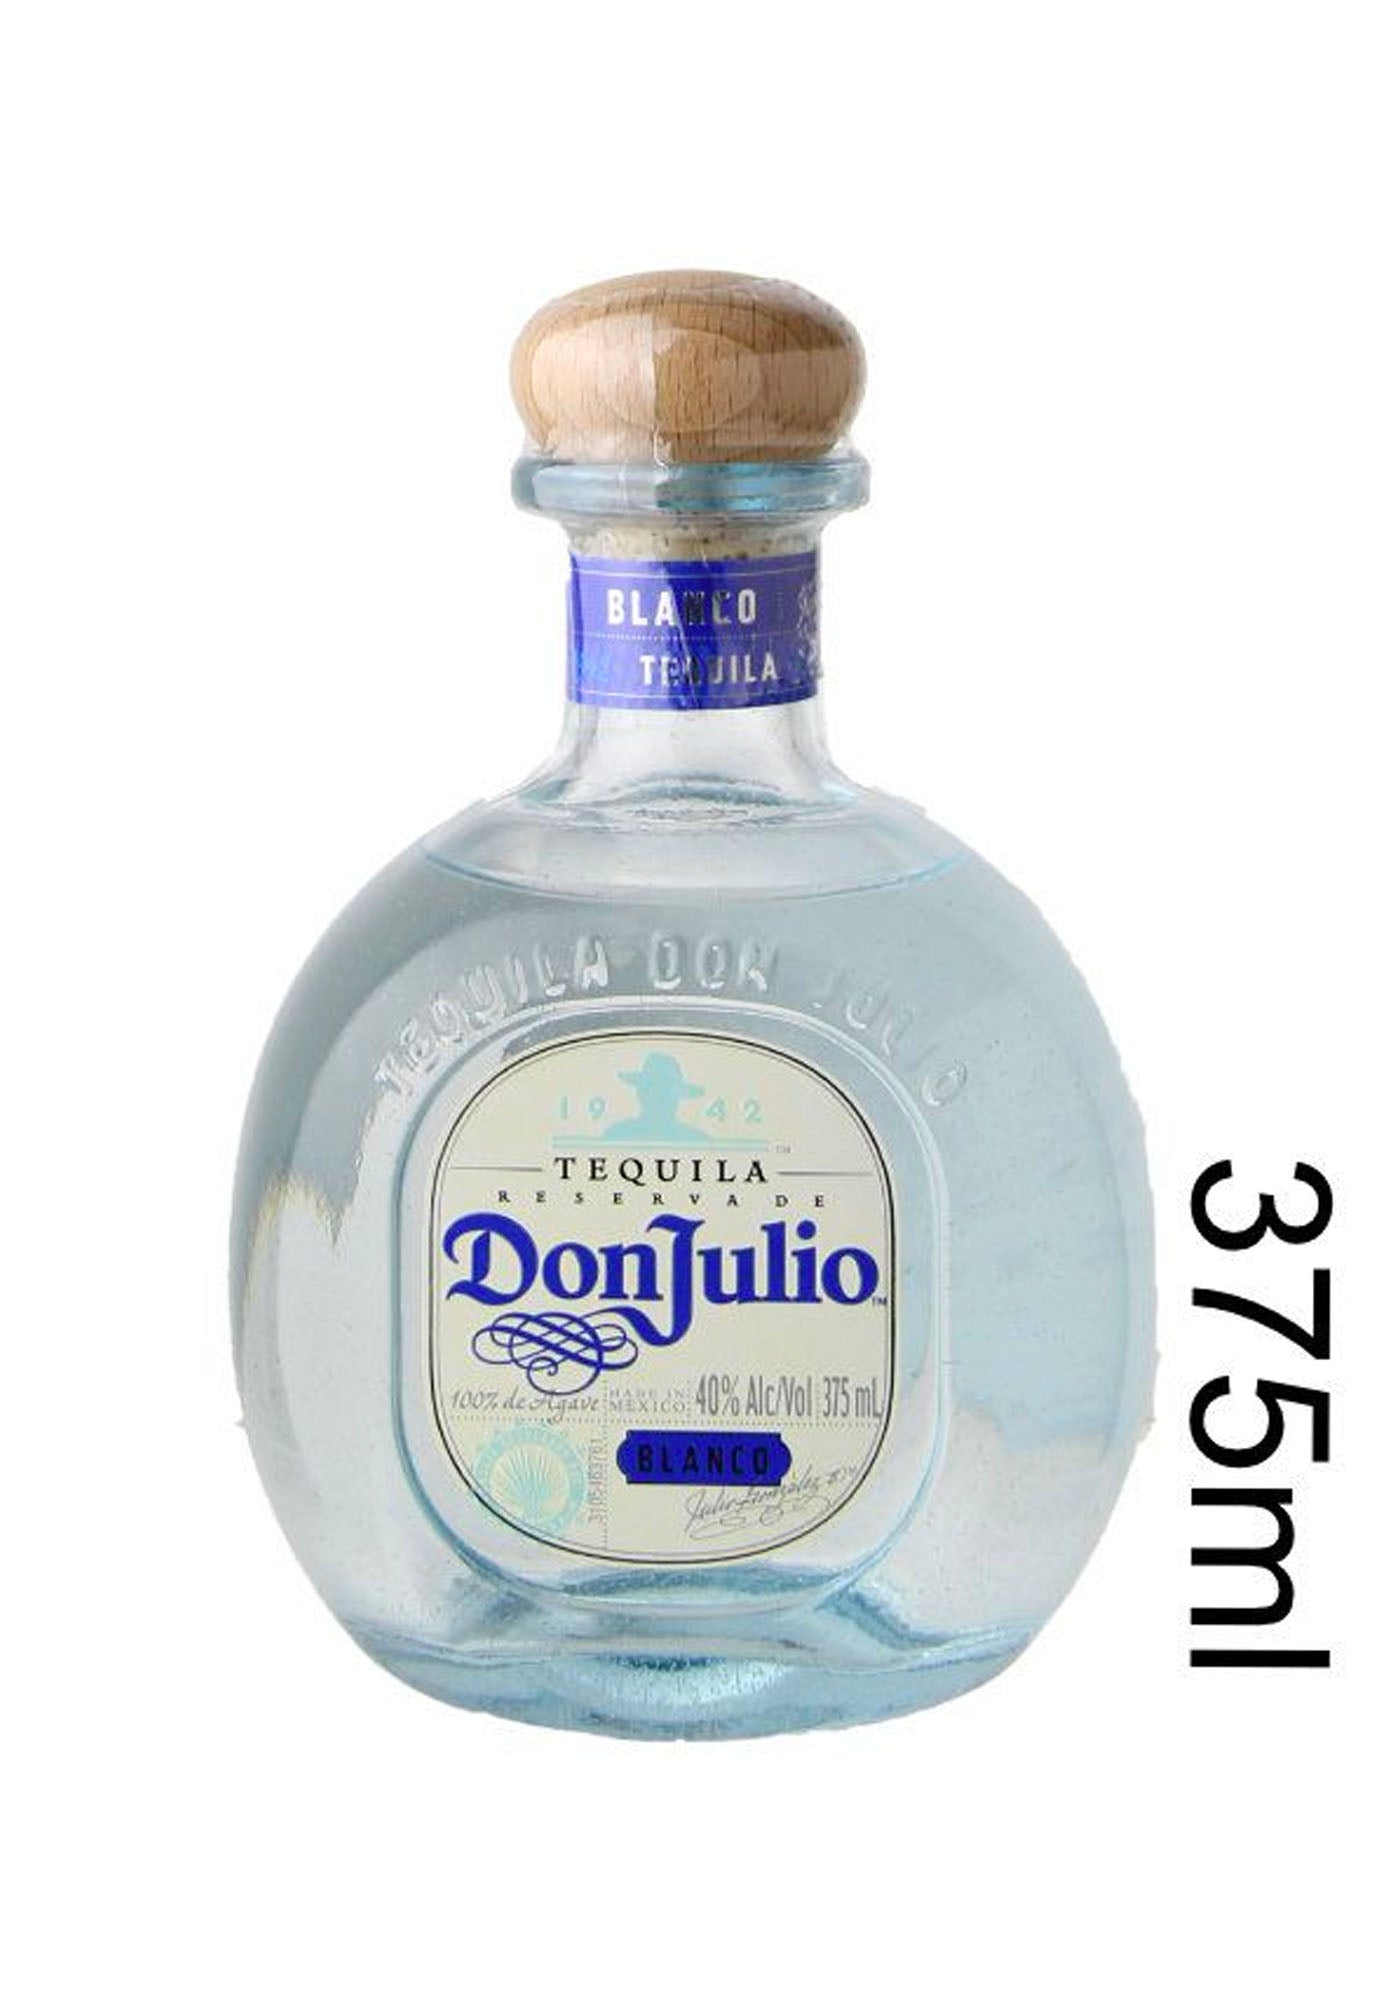 Don Julio Blanco - 375 ml